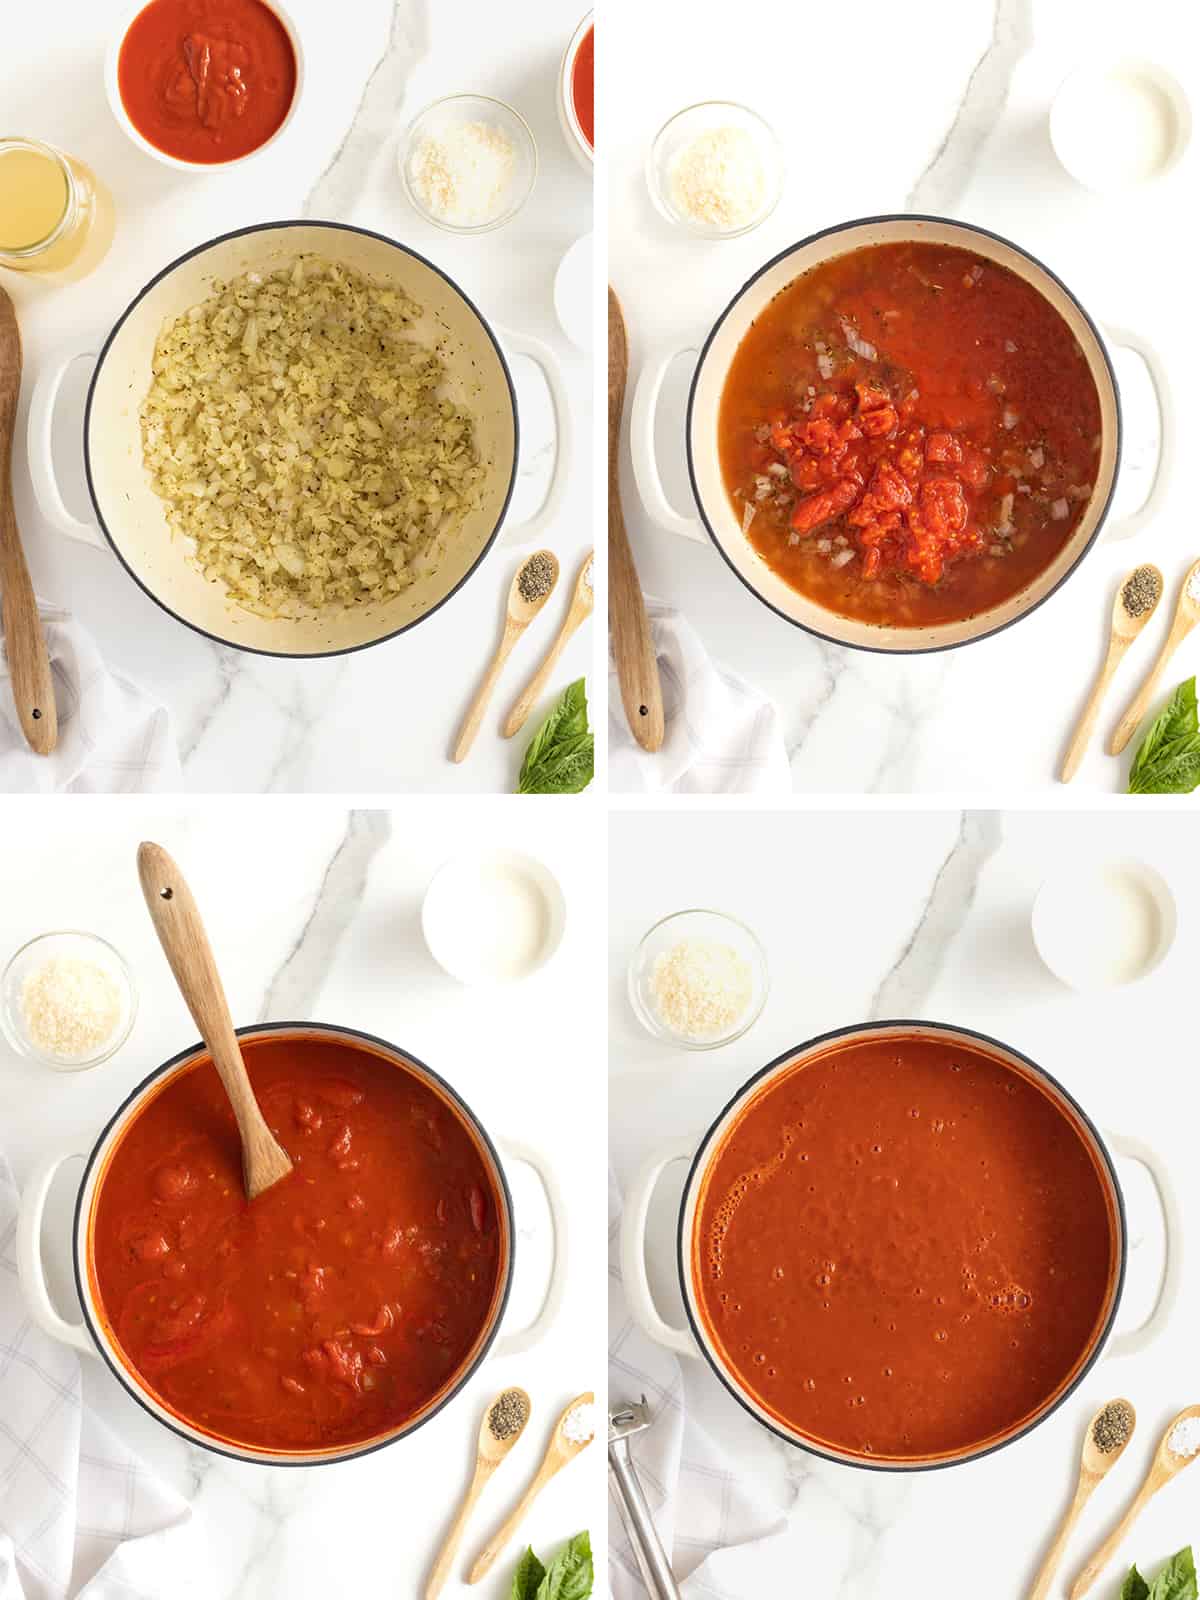 Steps to make homemade cream of tomato soup.